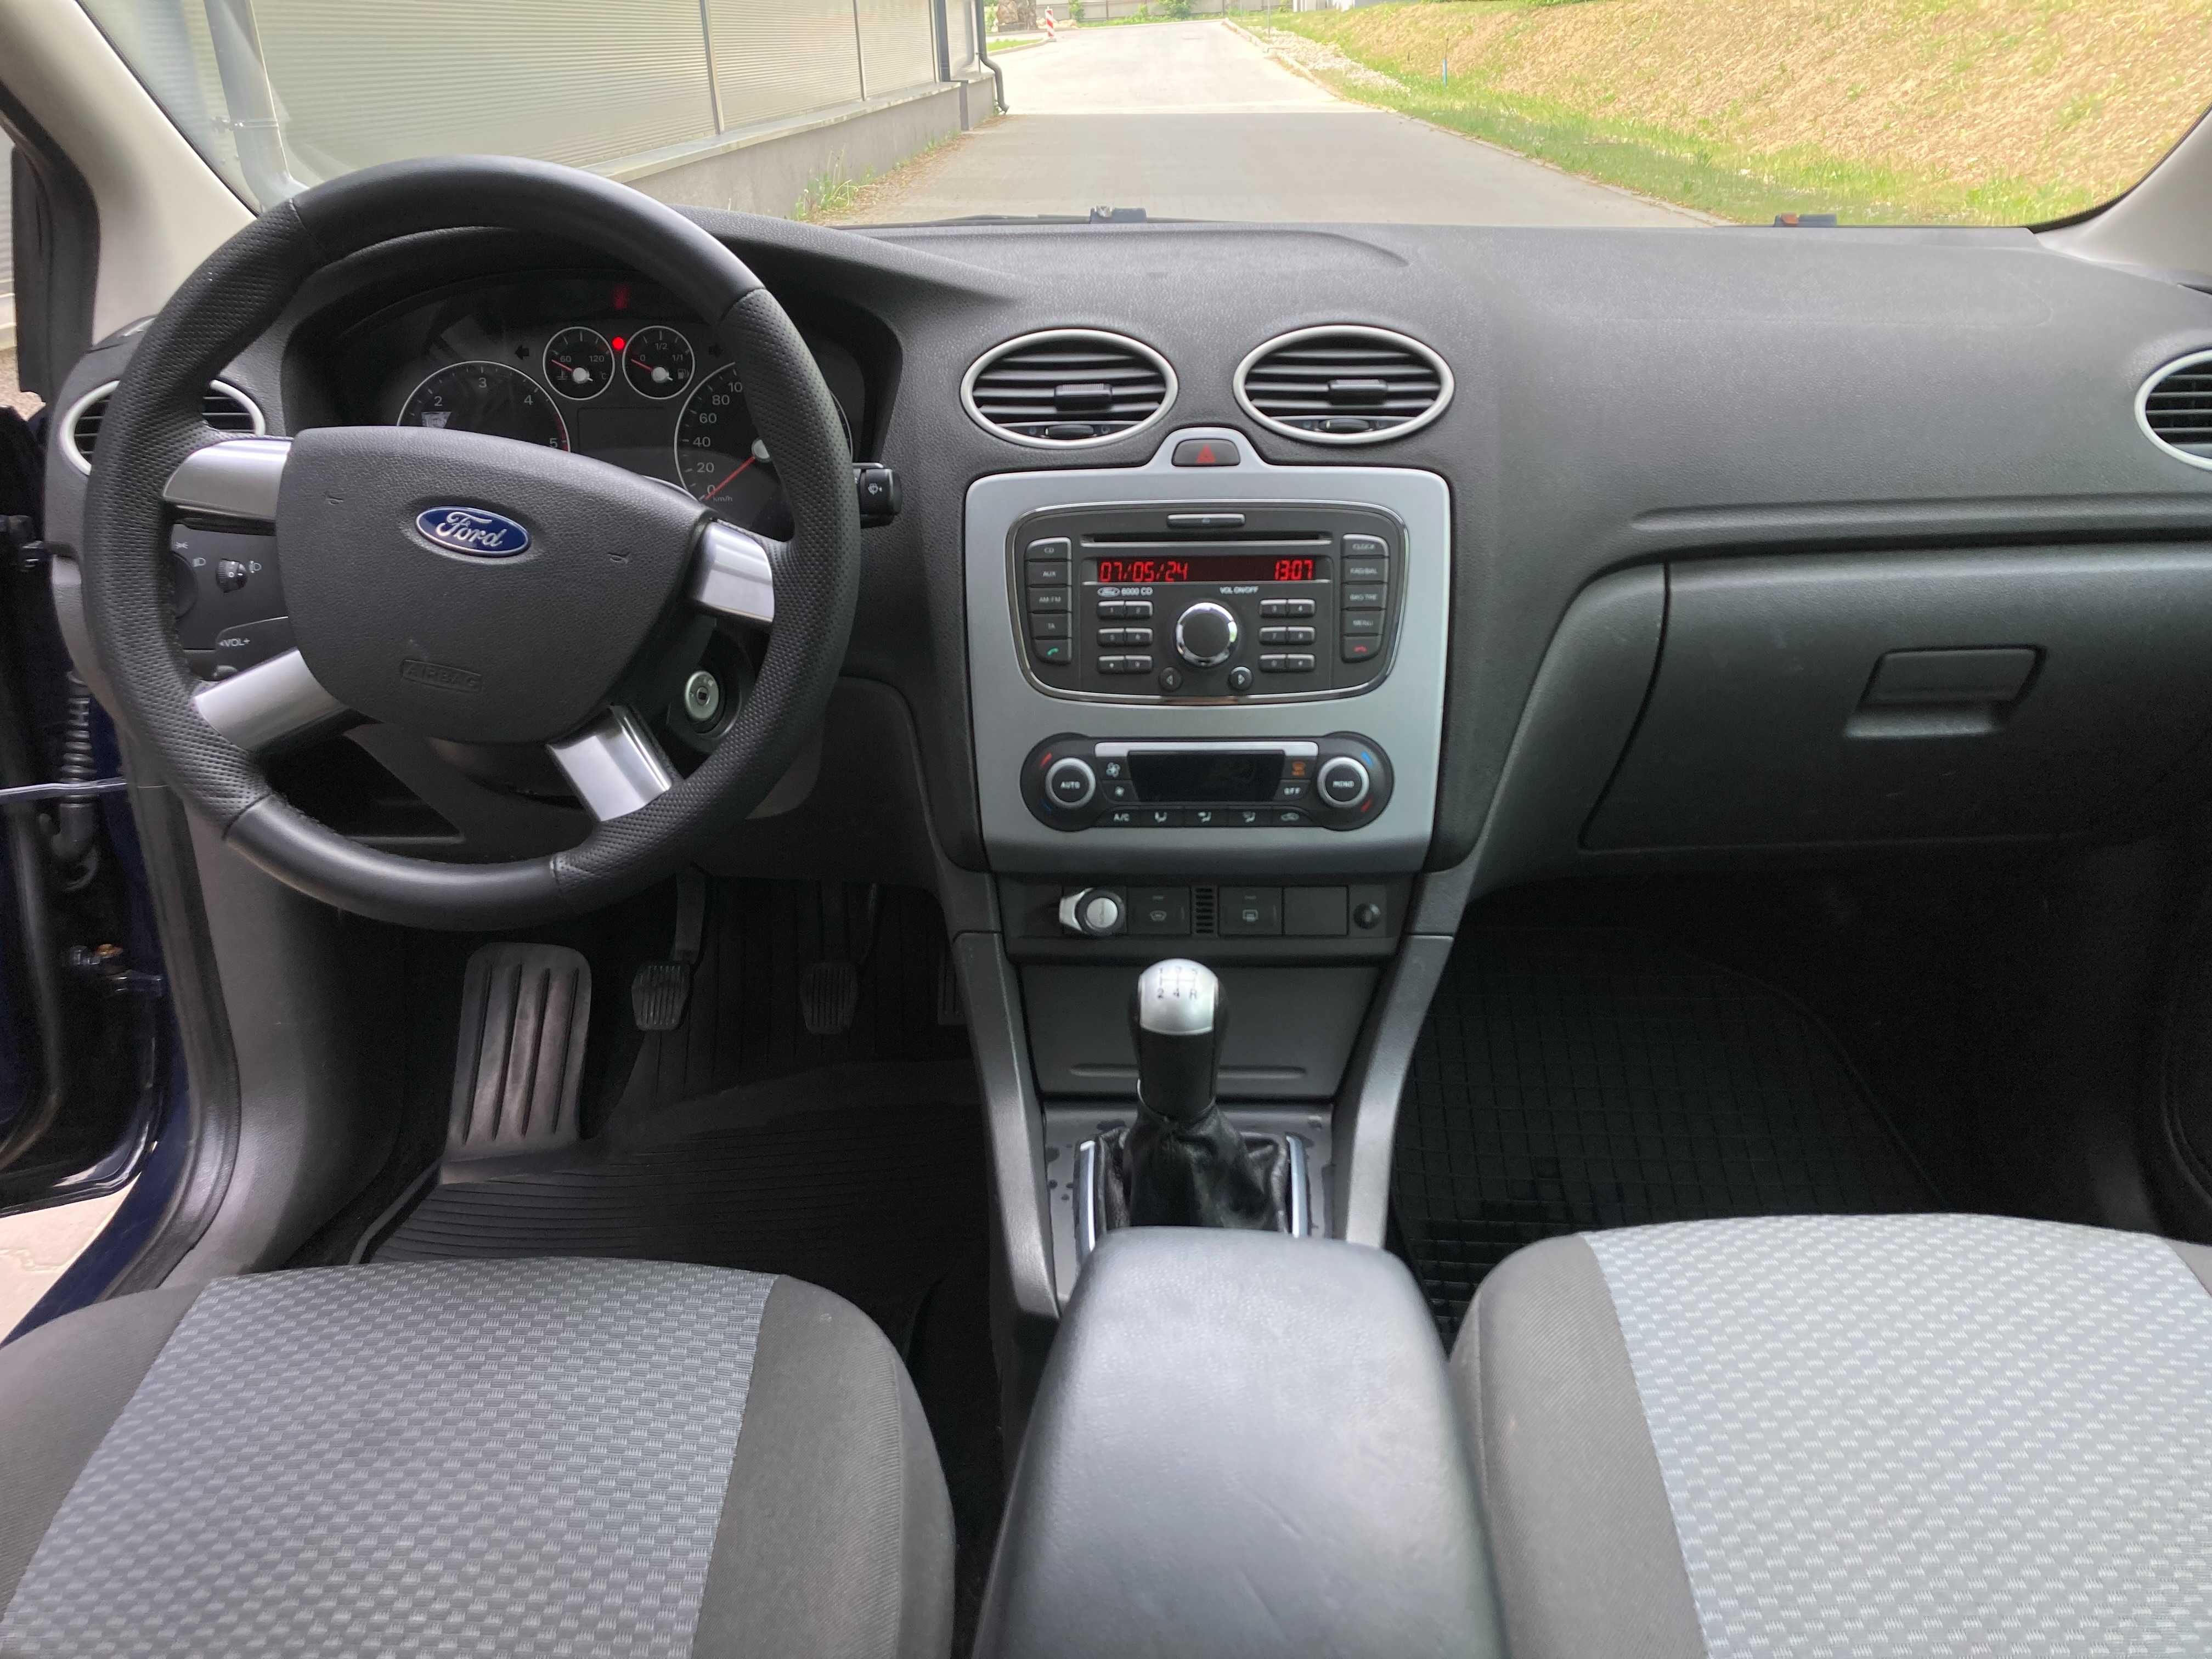 Ford Focus 1.8 TDCI 115KM salon polska klima